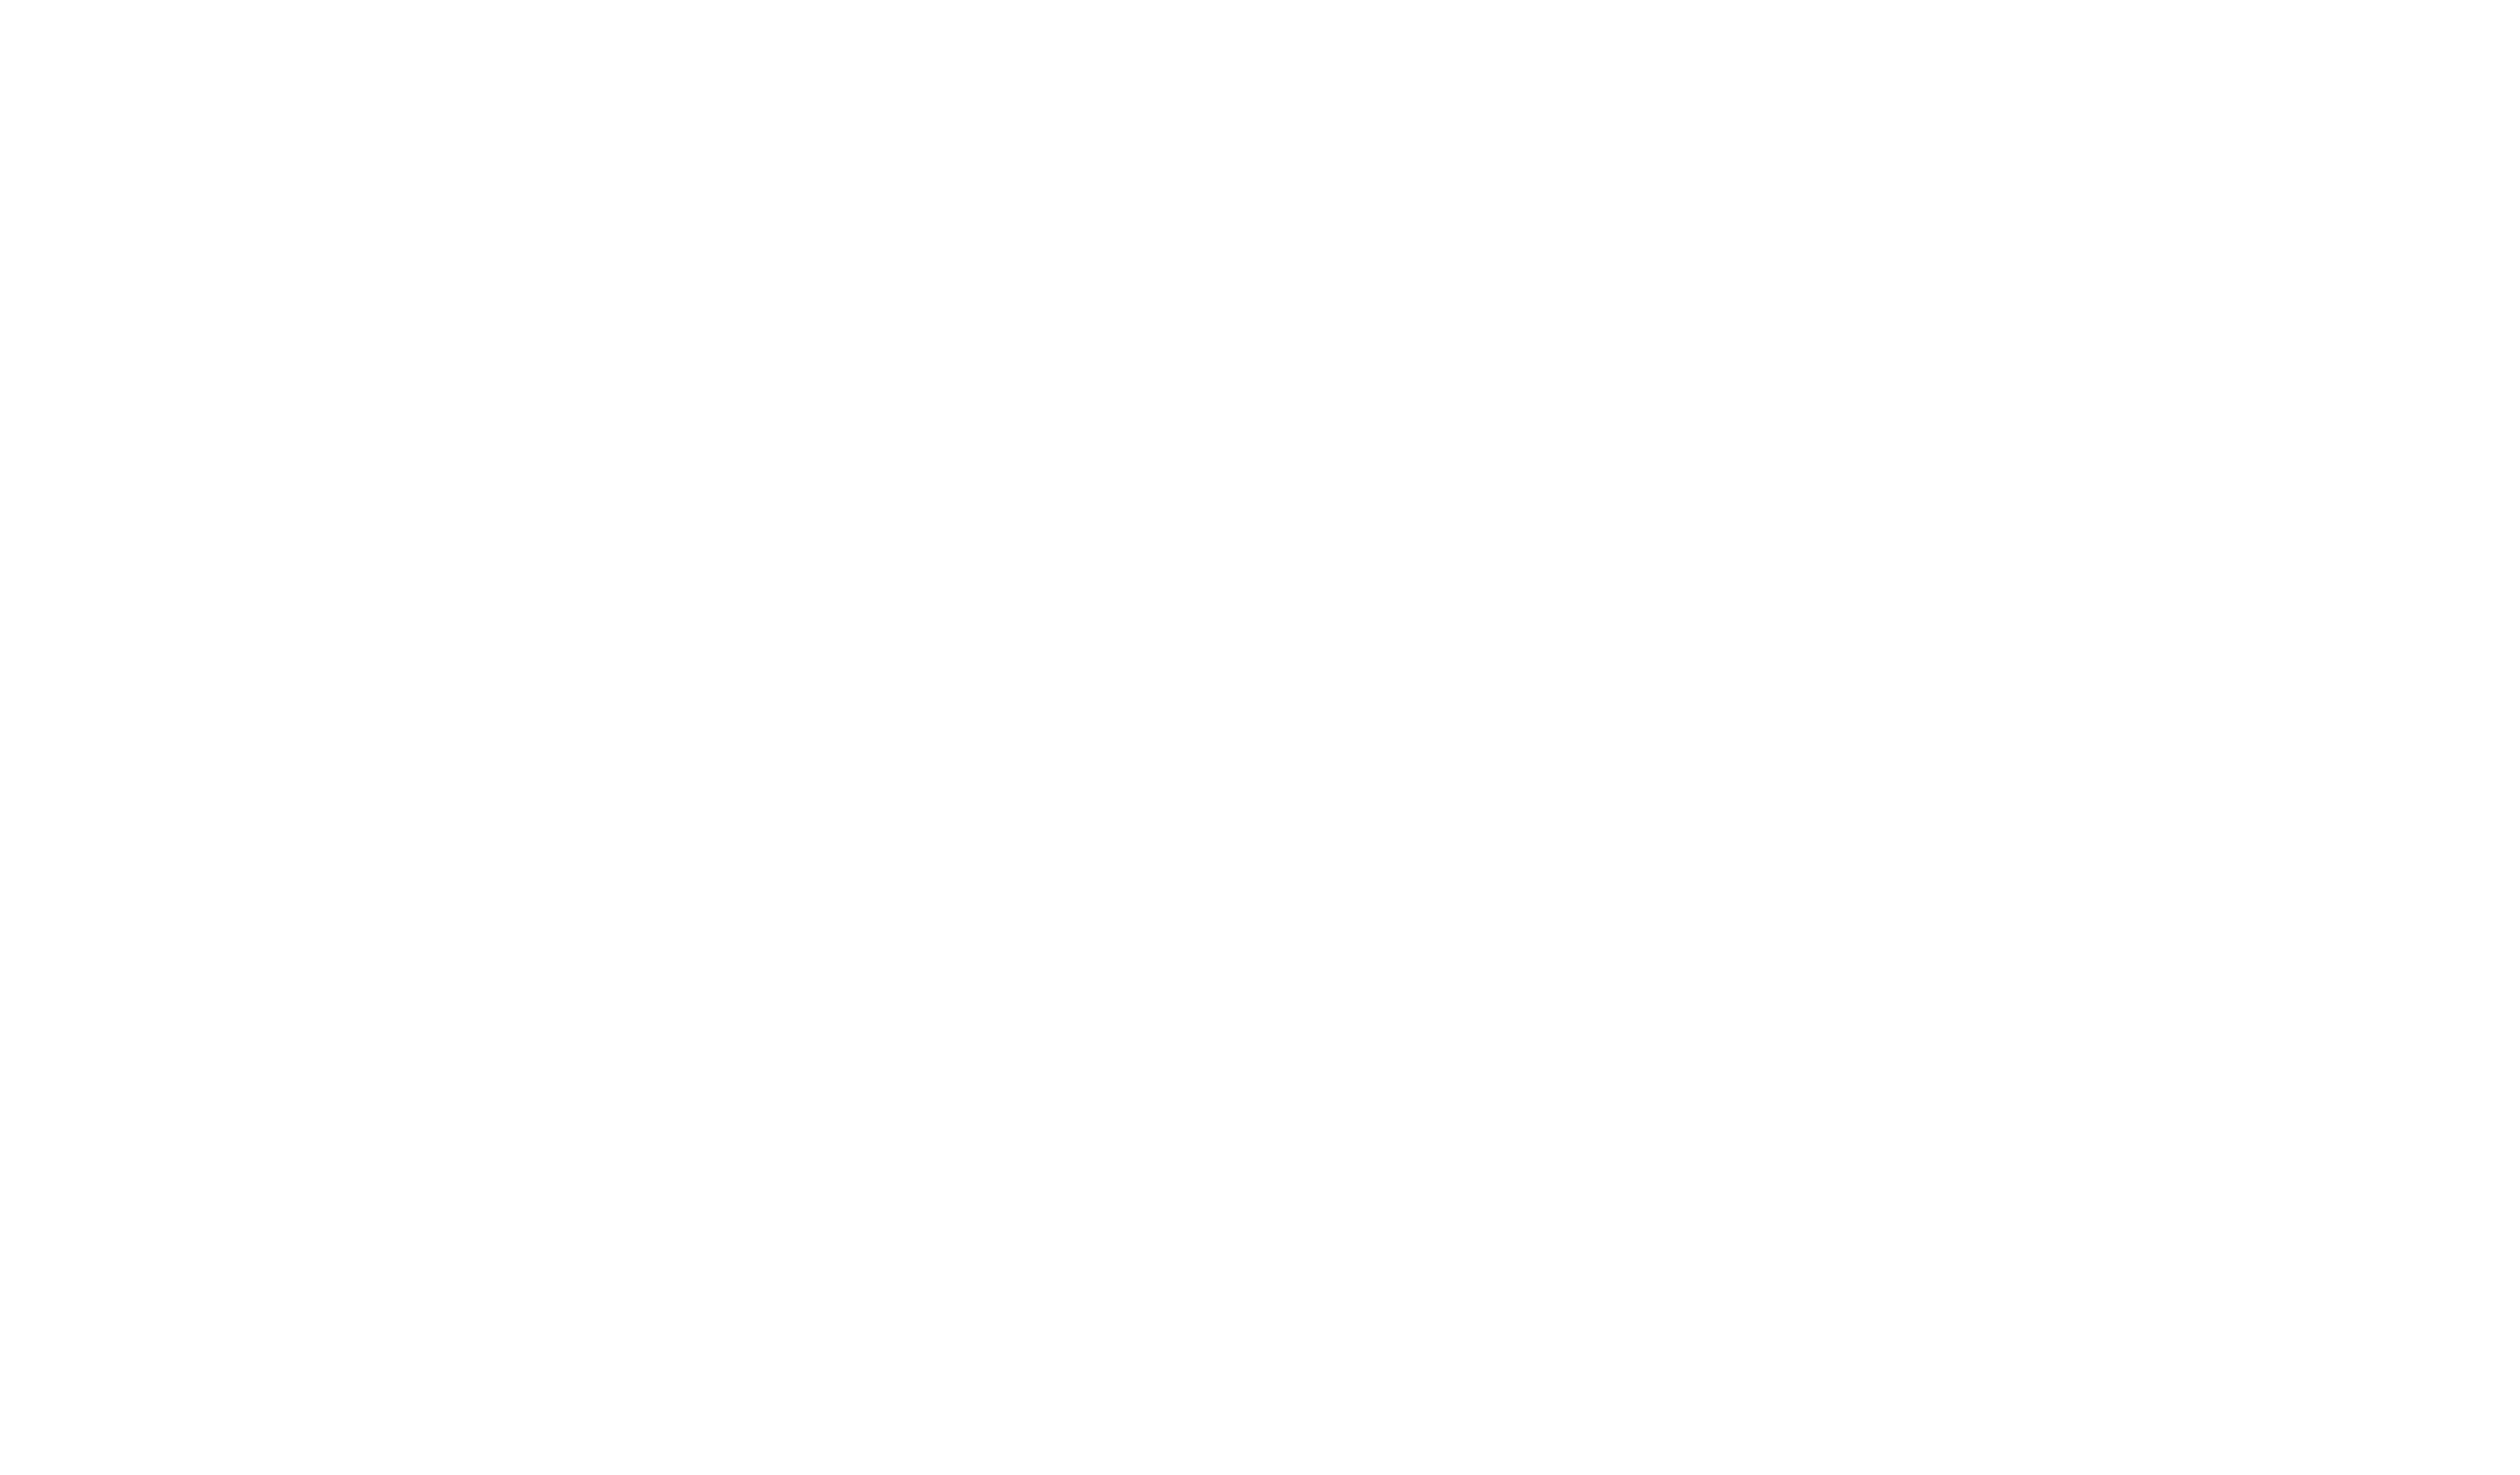 Discover Your Idaho